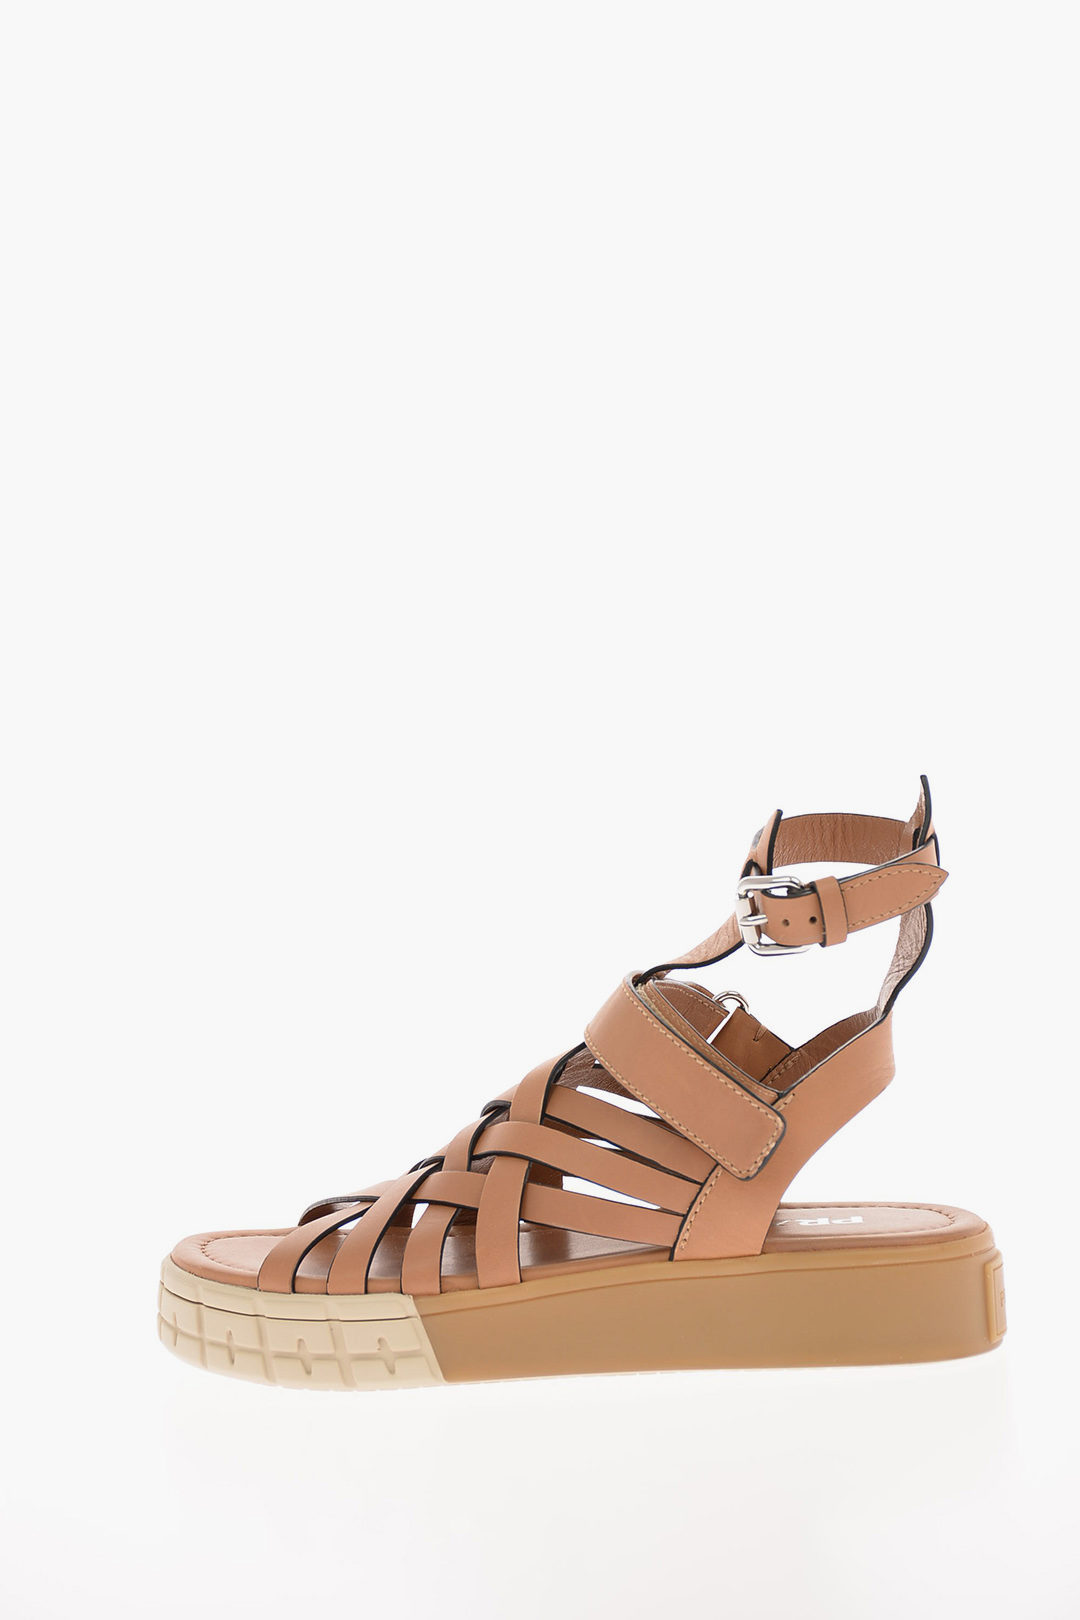 Prada Braided Leather Sandals with Platform 3 Cm women - Glamood Outlet